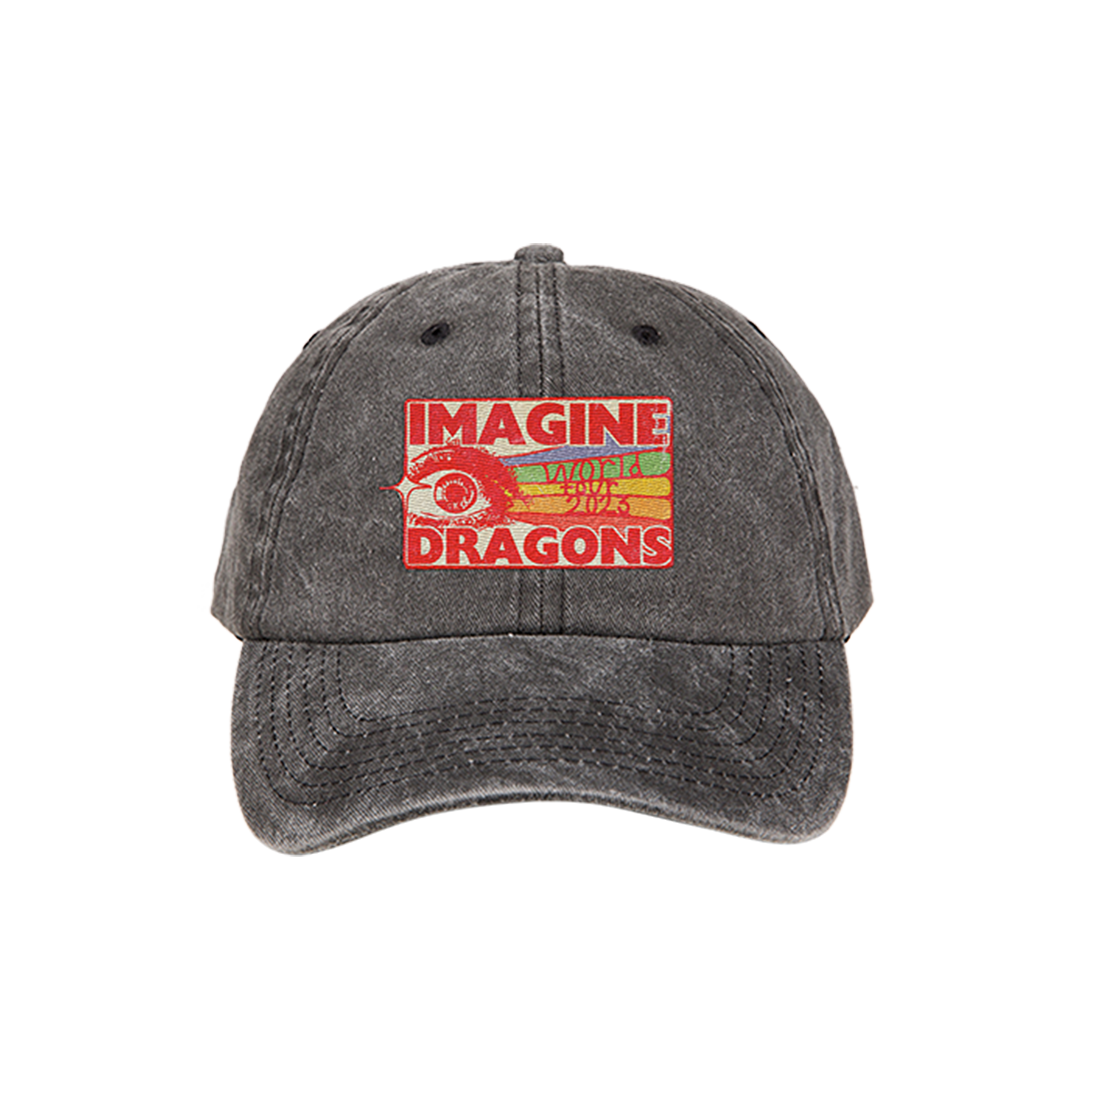 Imagine Dragons - EU Tour Hat